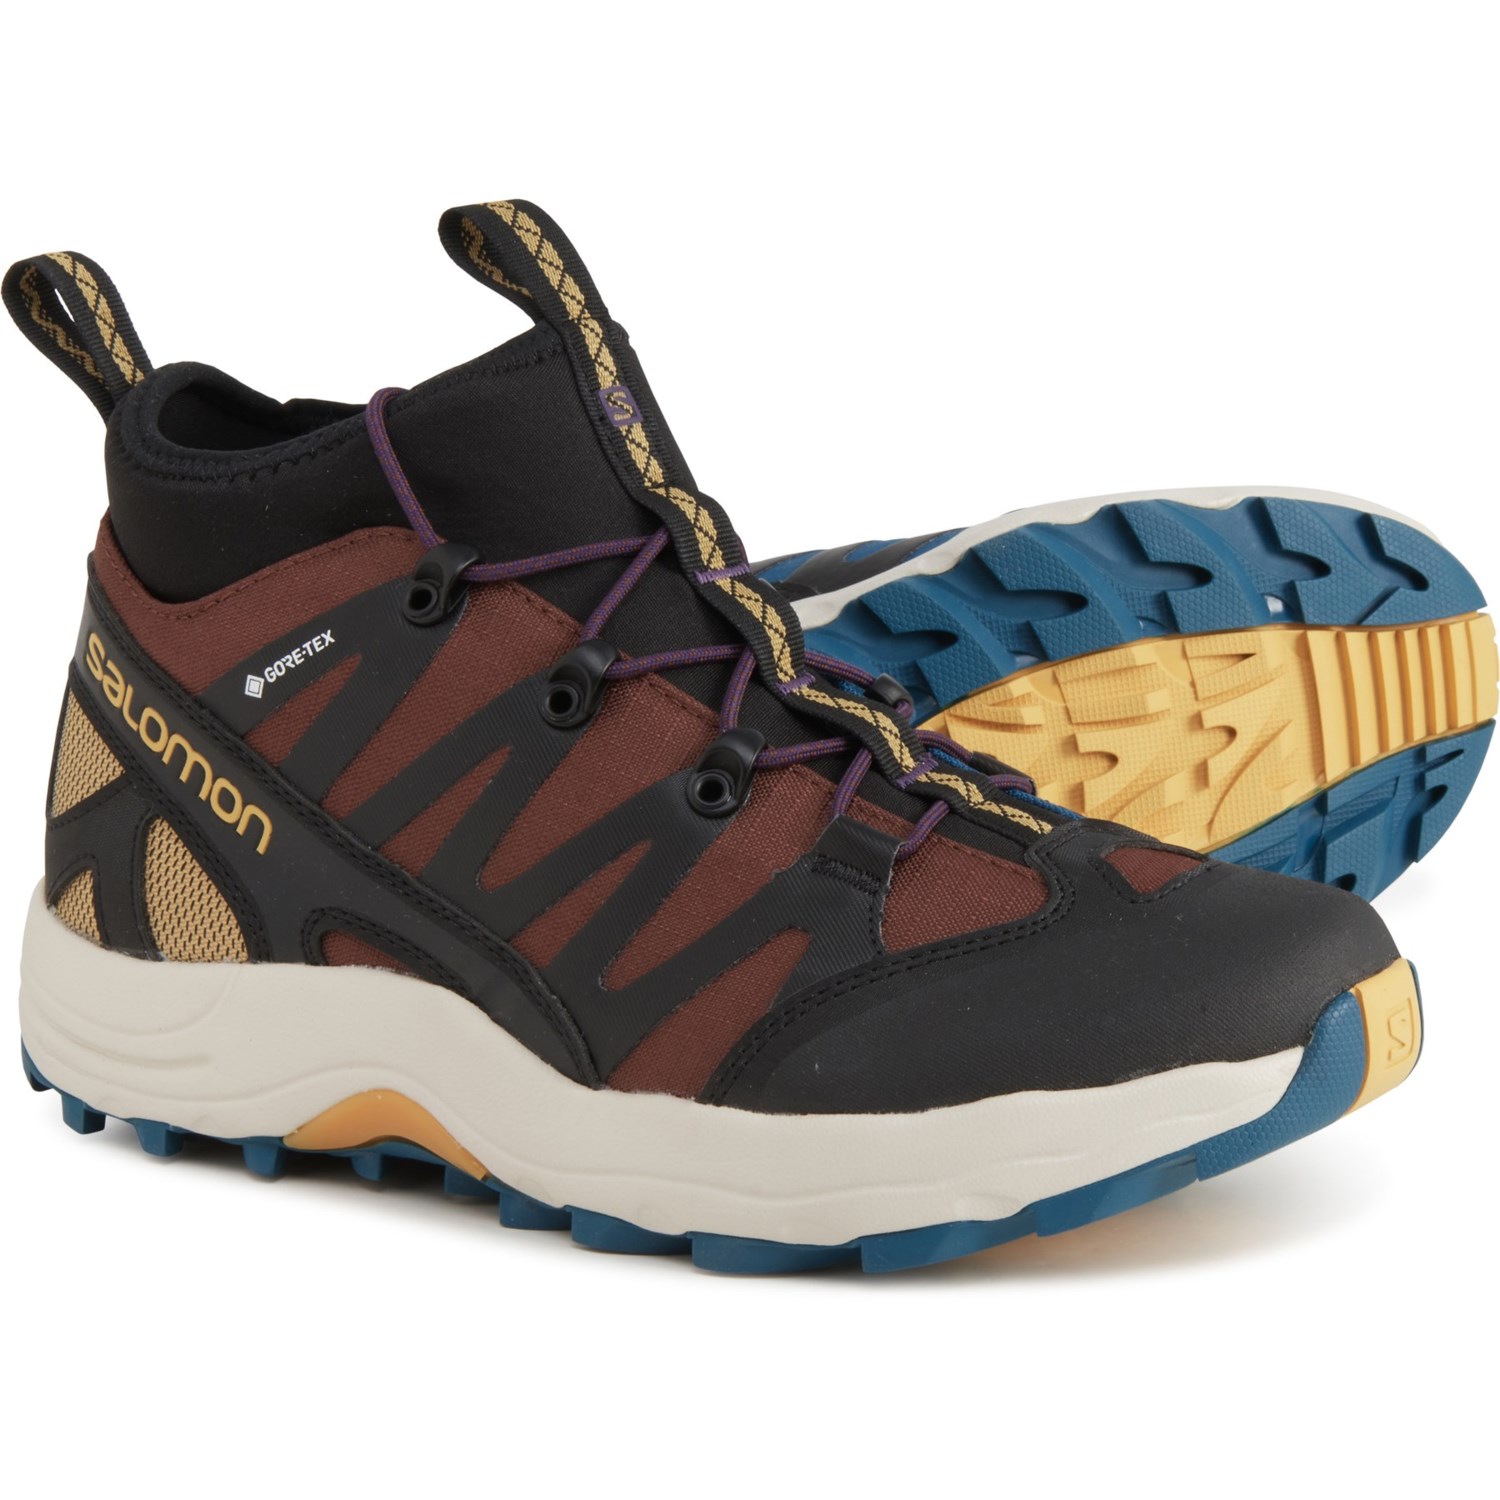 Salomon XA Pro 1 Gore-Tex Mid Hiking Boots - Waterproof (For Men and Women)